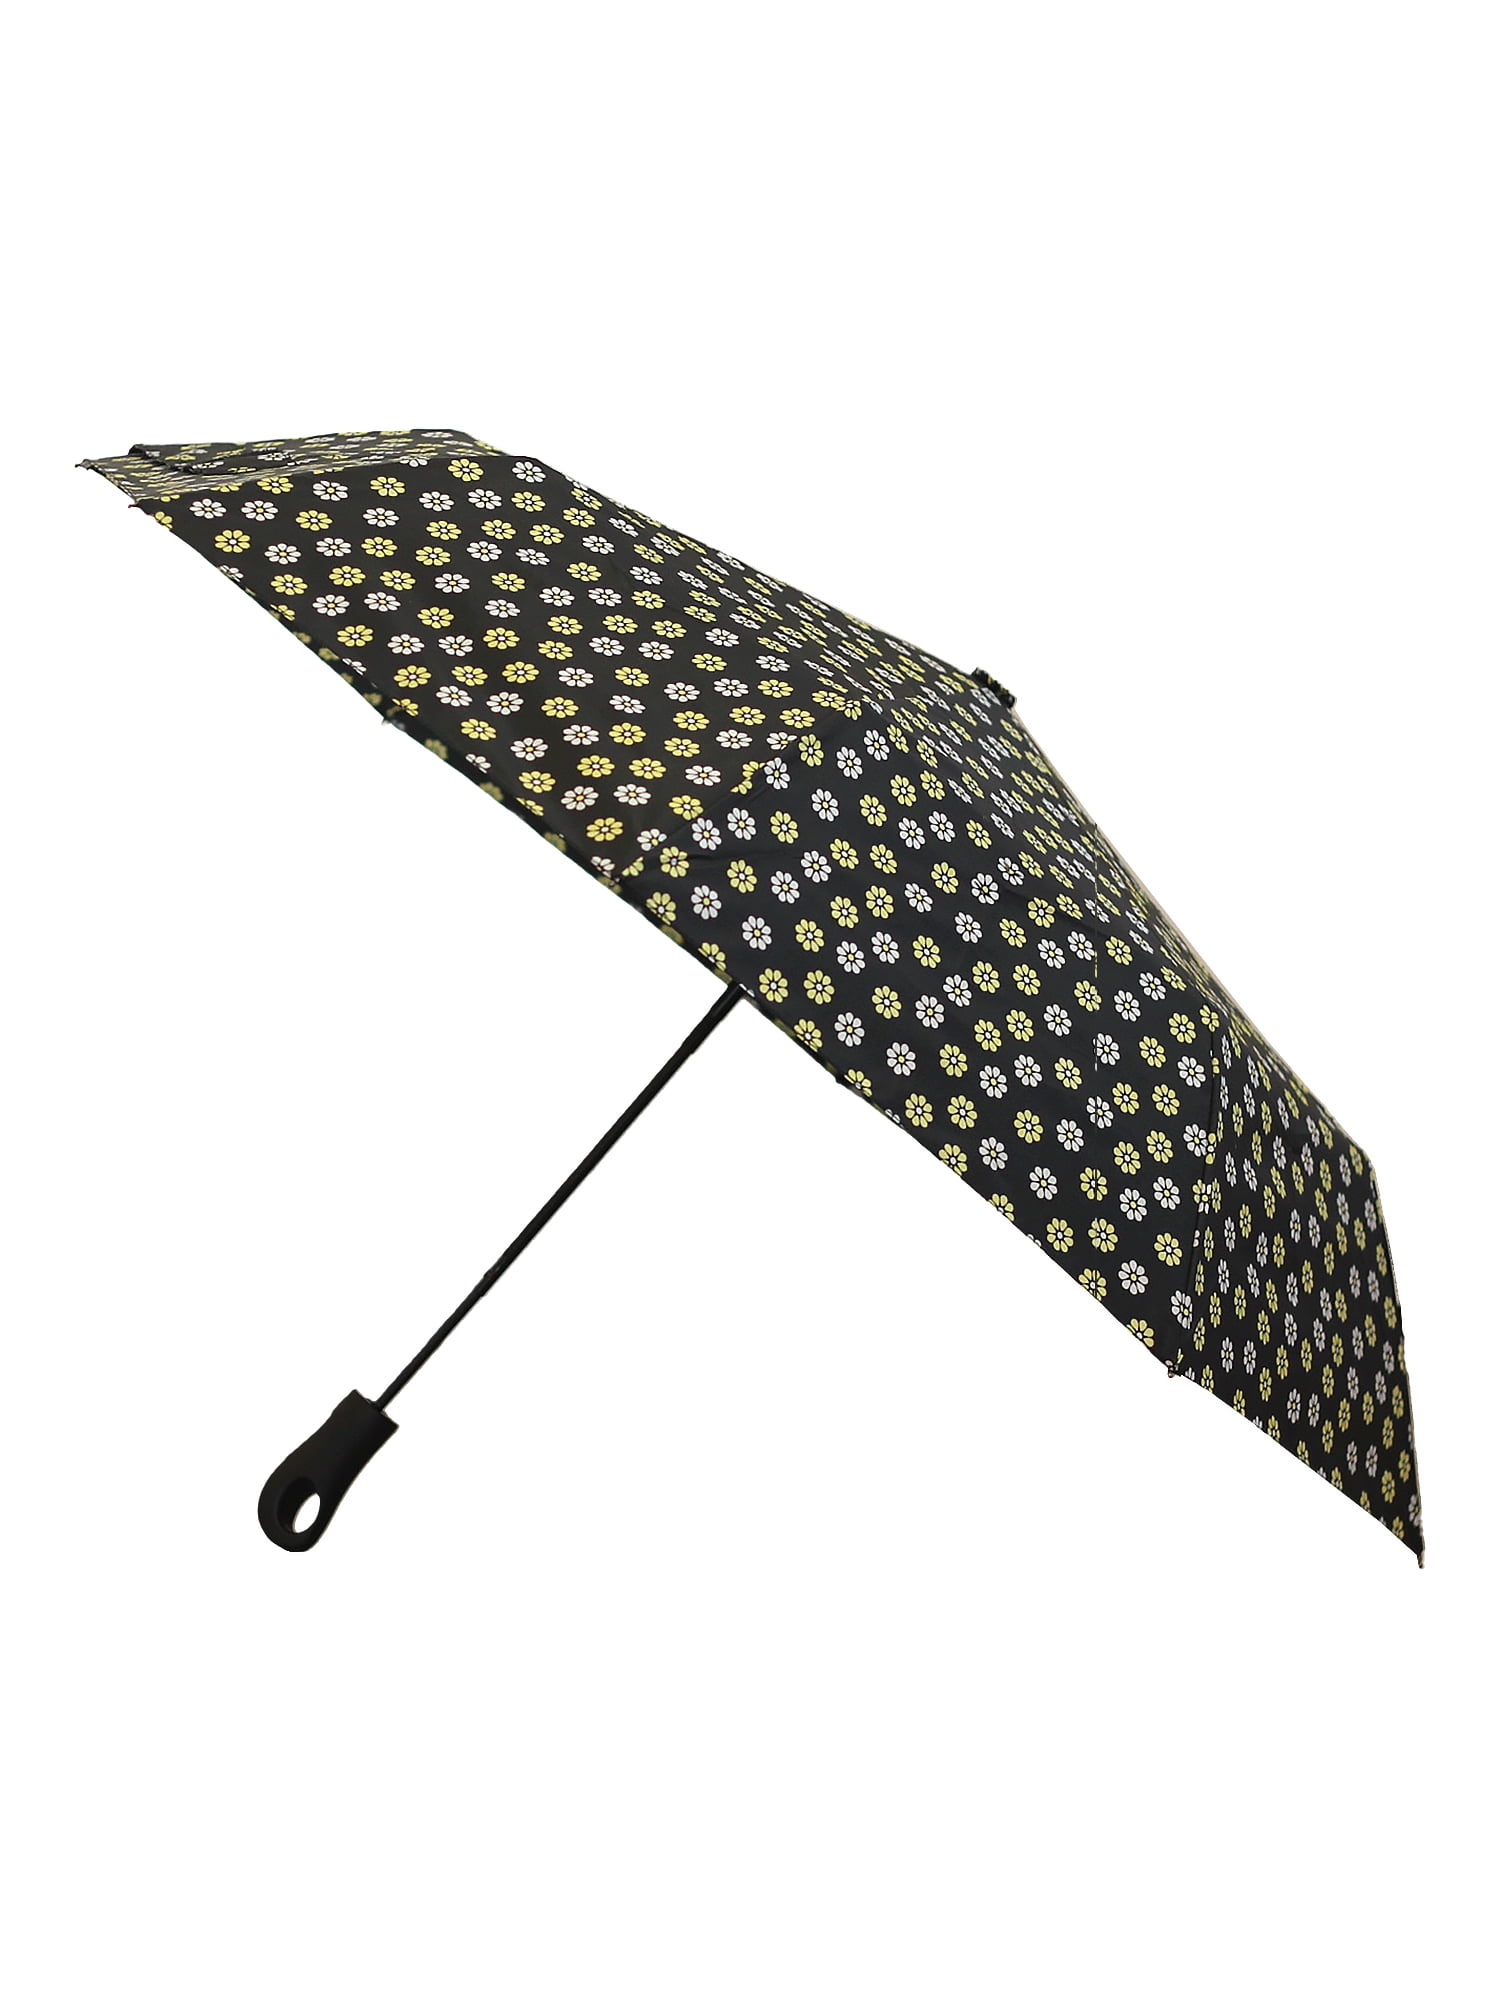 Totes Leopard Print Automatic Open And Close Compact Umbrella Medium Size NWT 